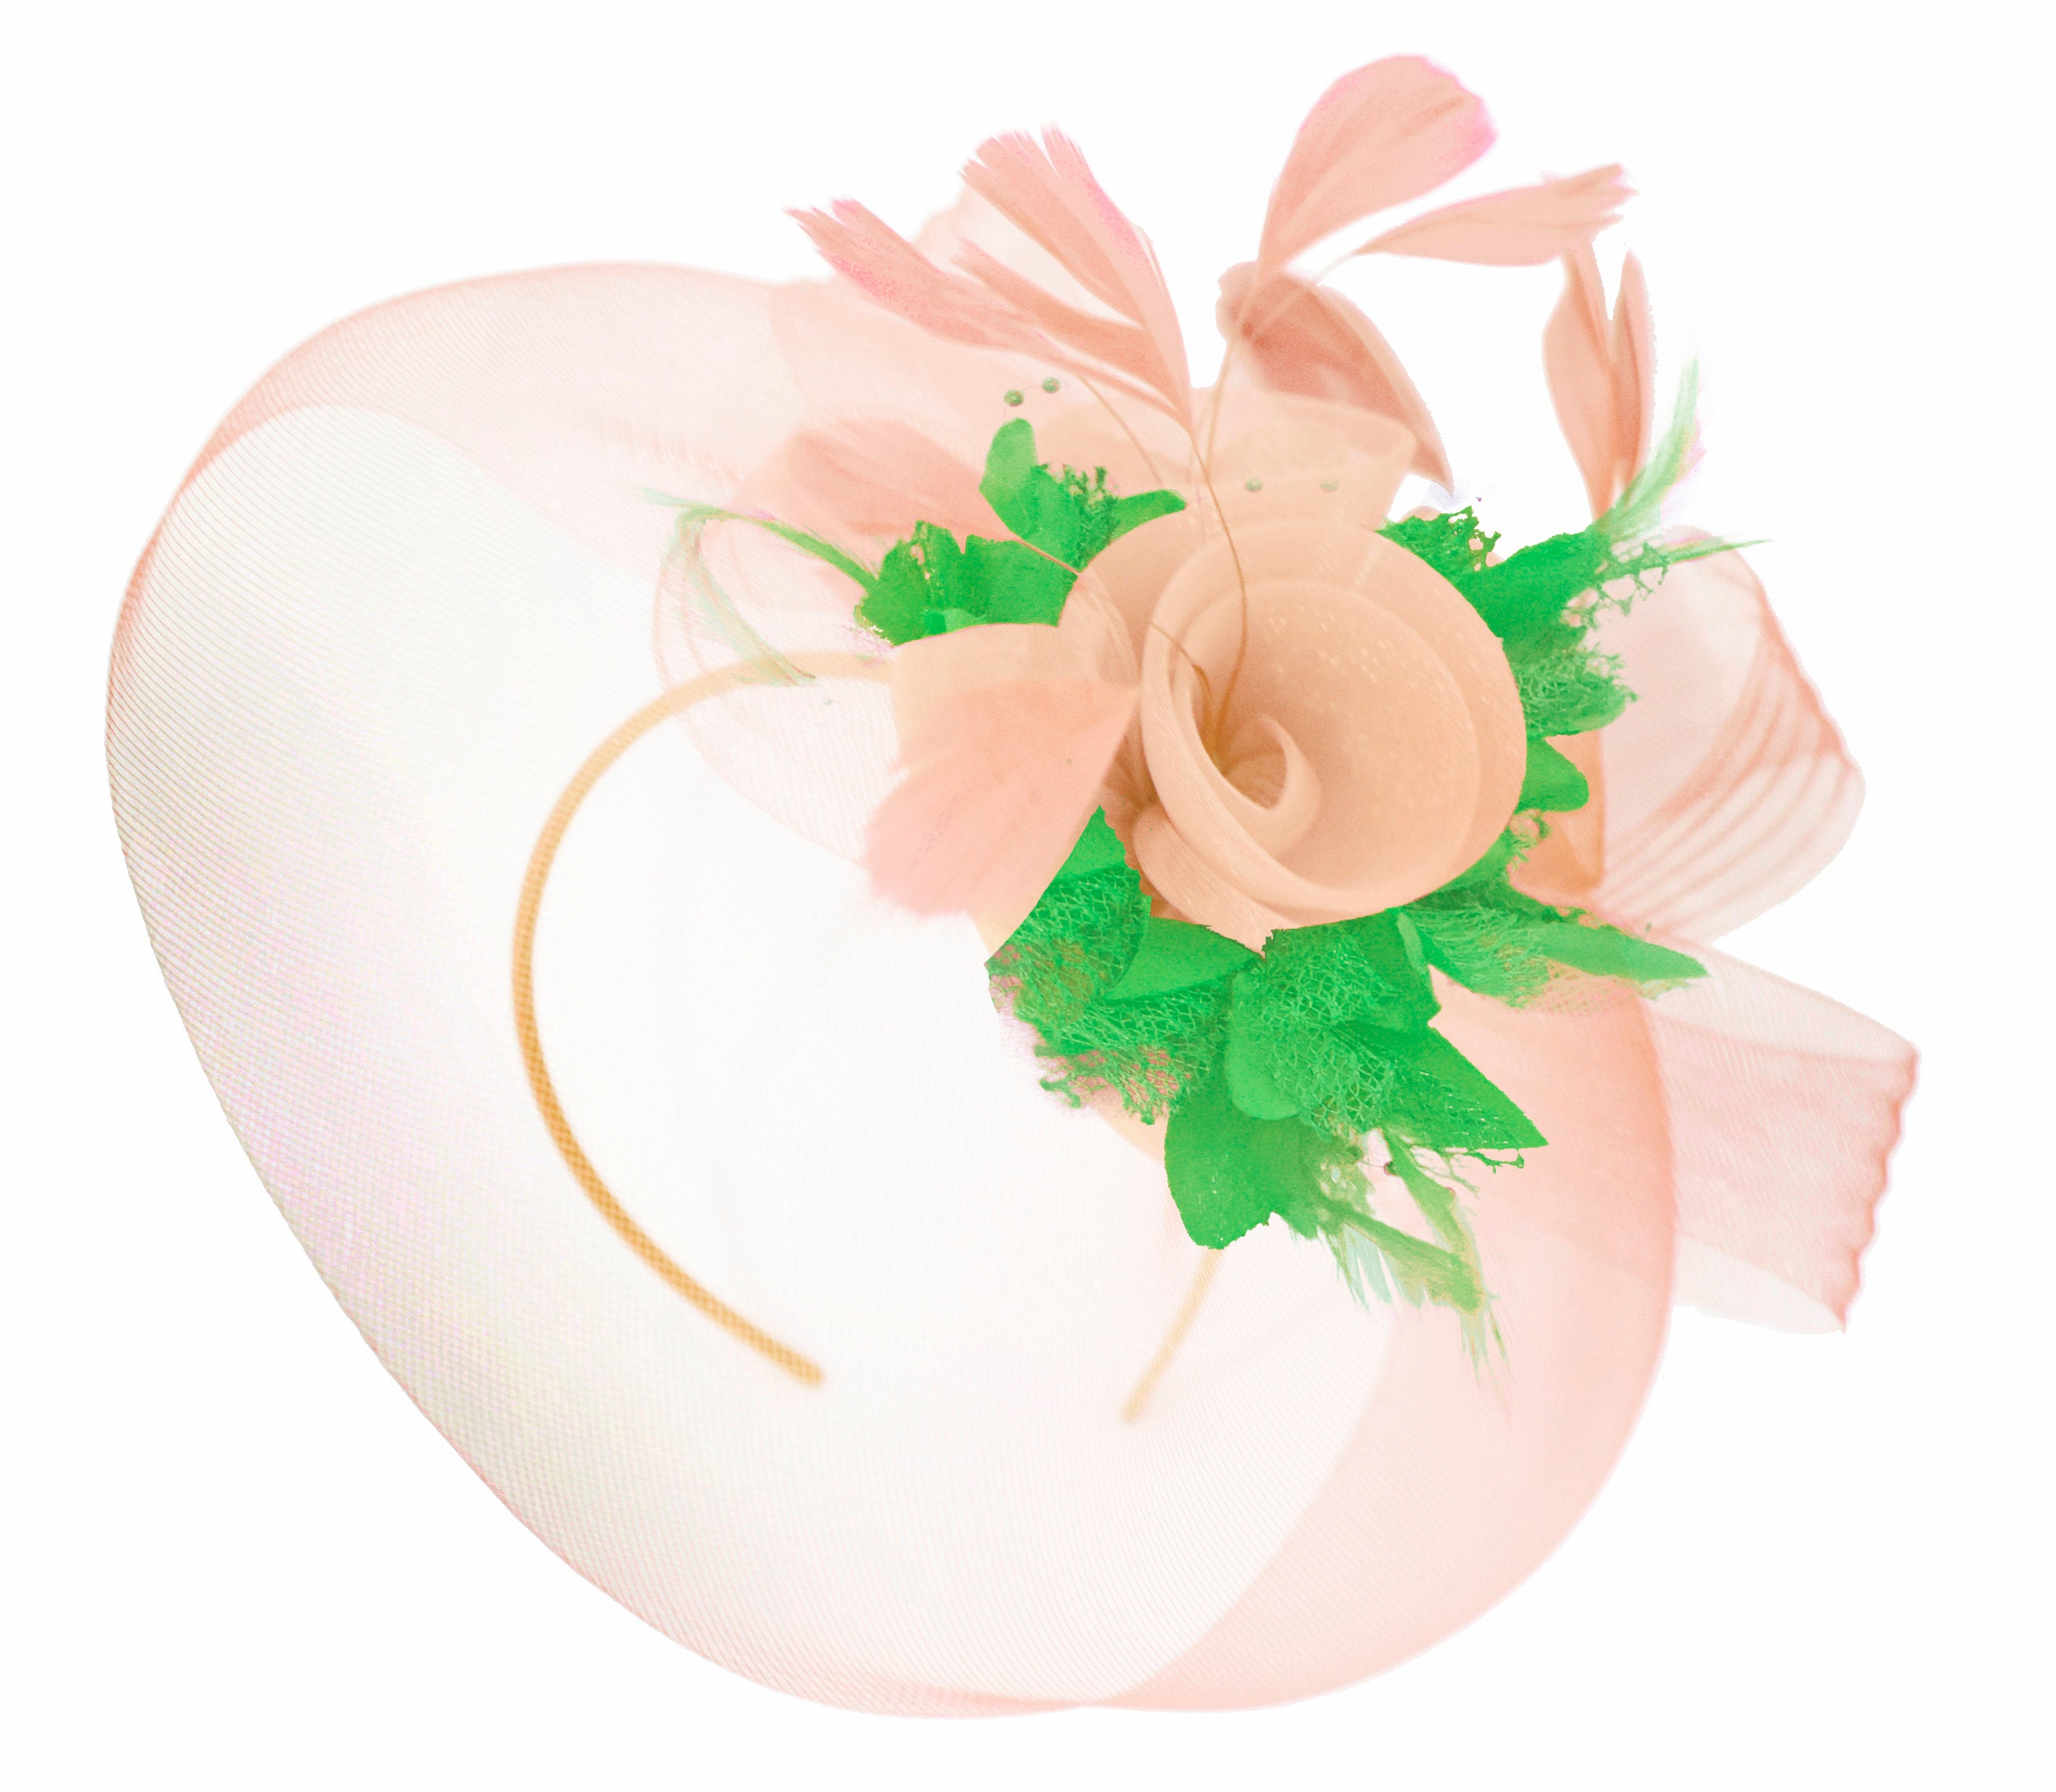 Caprilite Nude Pink Peach and Jade Green Fascinator Hat Veil Net Hair Clip Ascot Derby Races Wedding Headband Feather Flower